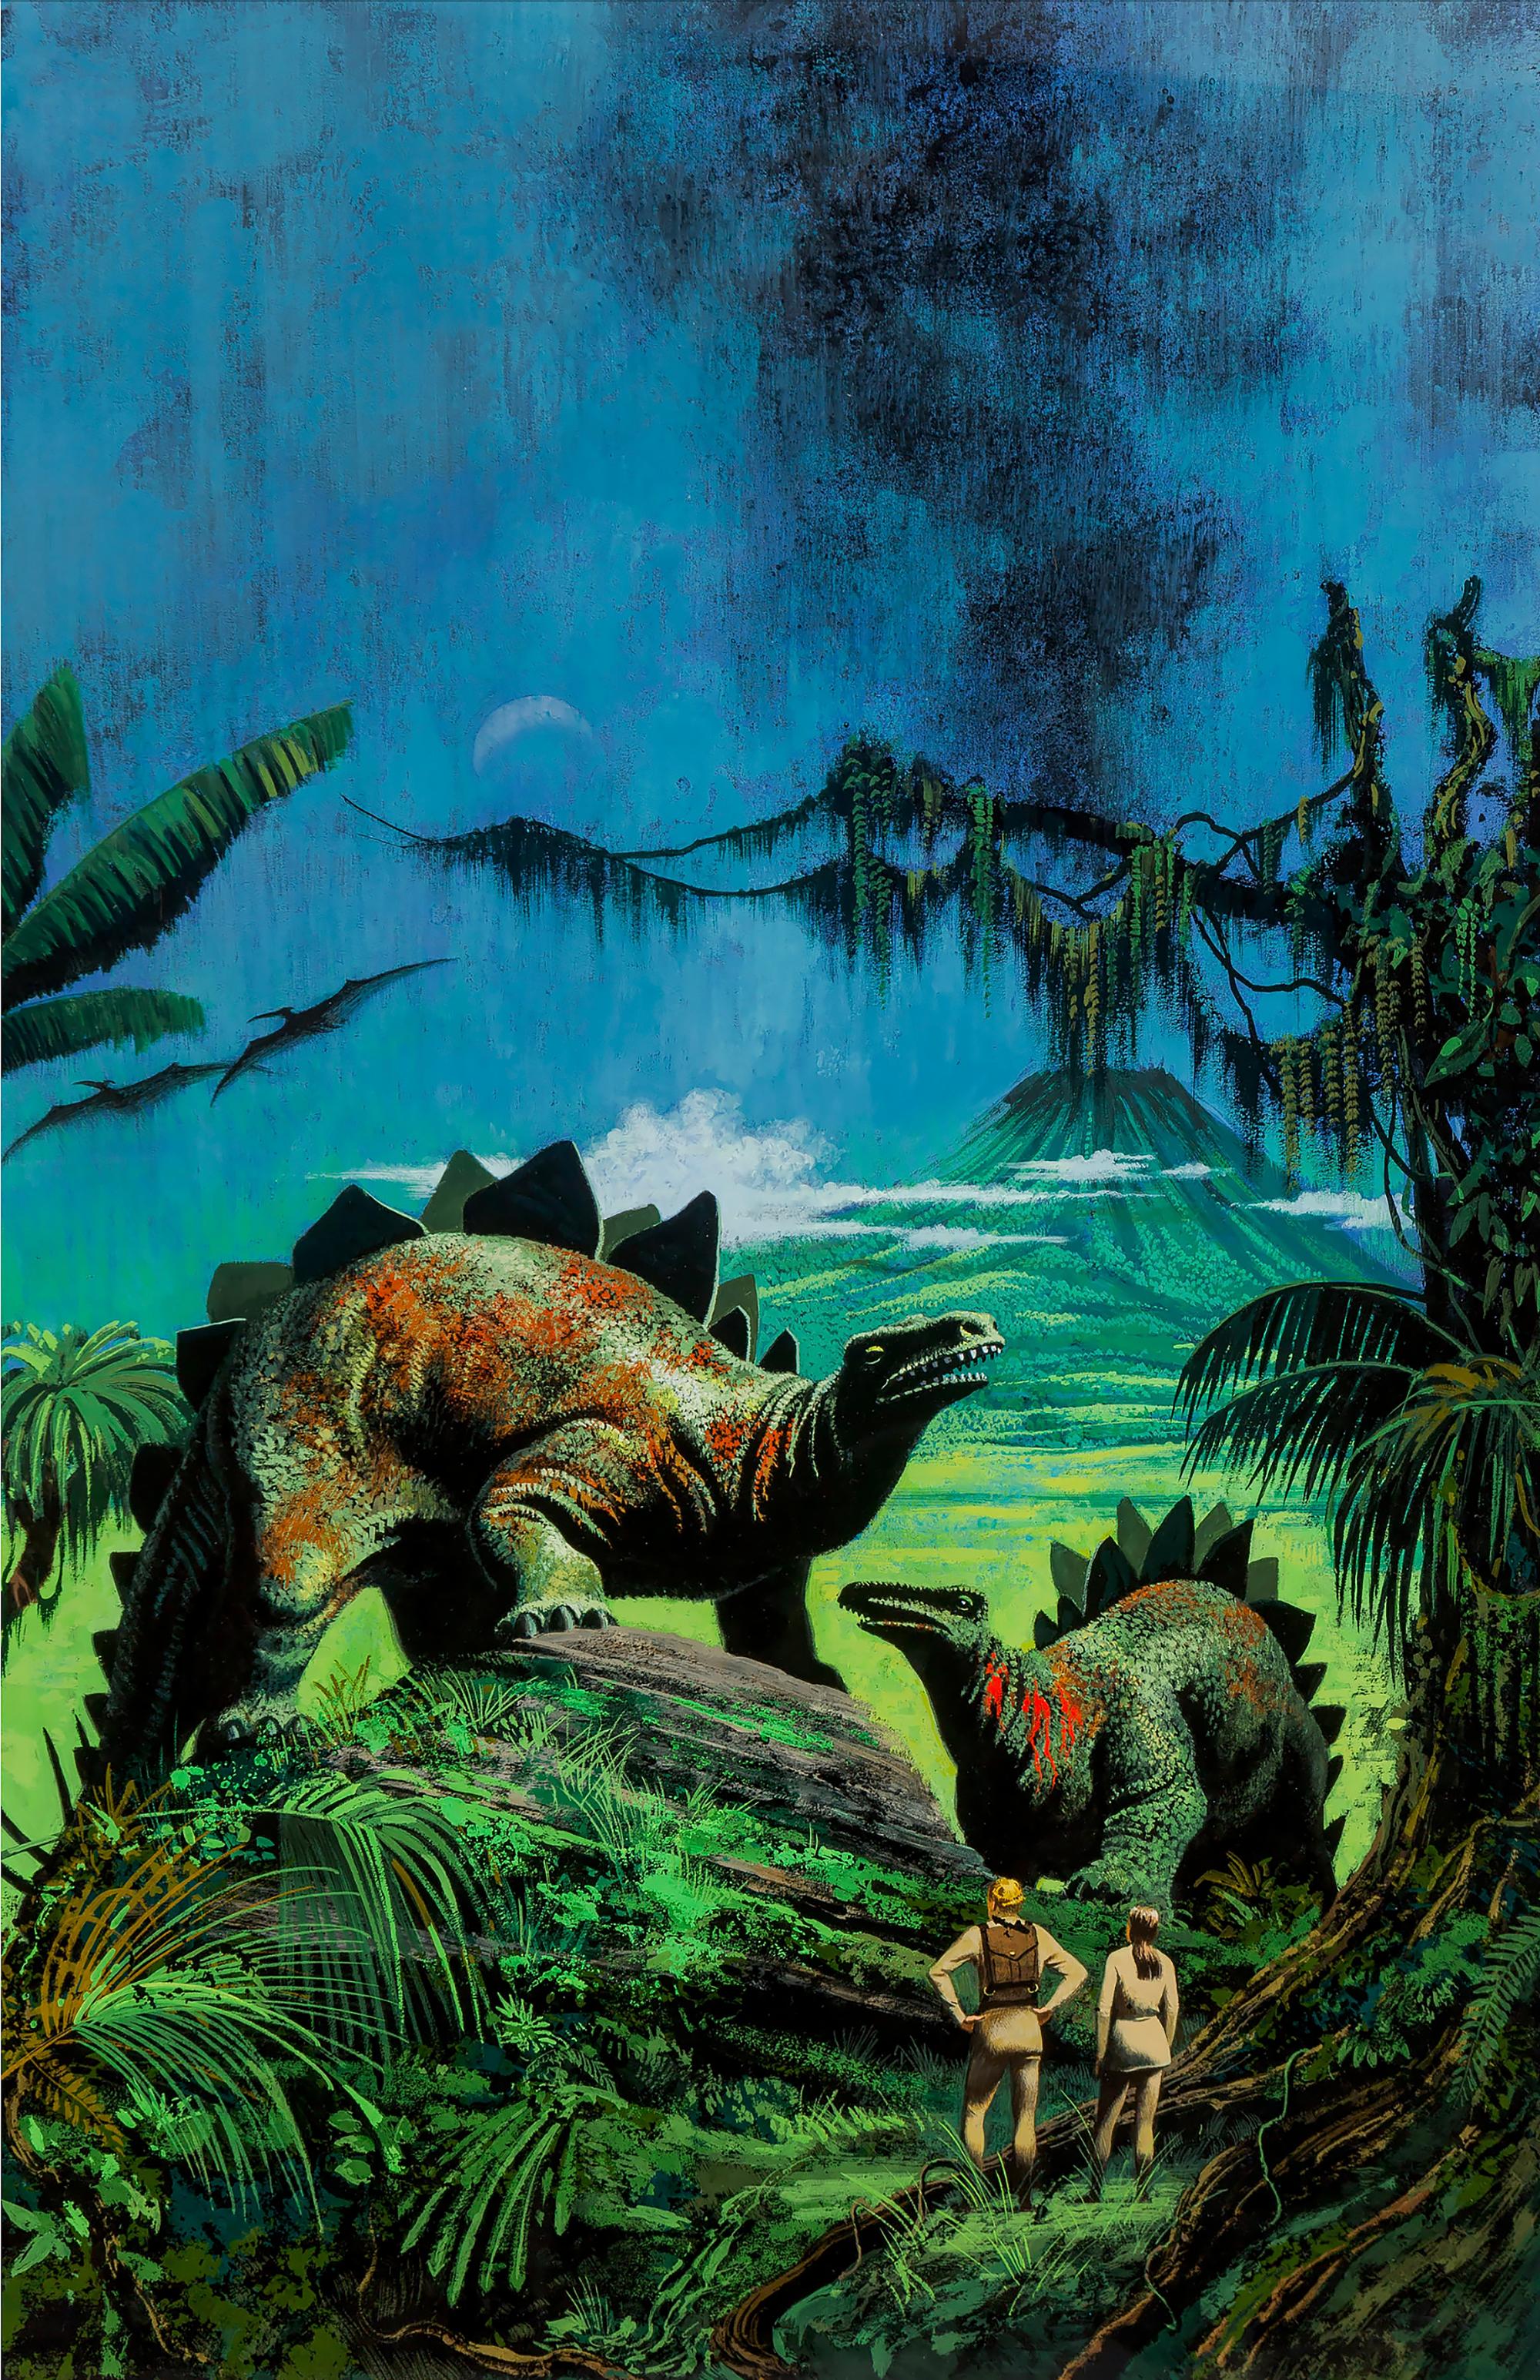 Don Punchatz Animal Painting - Dinosaurs and volcano. Jurassic park like image